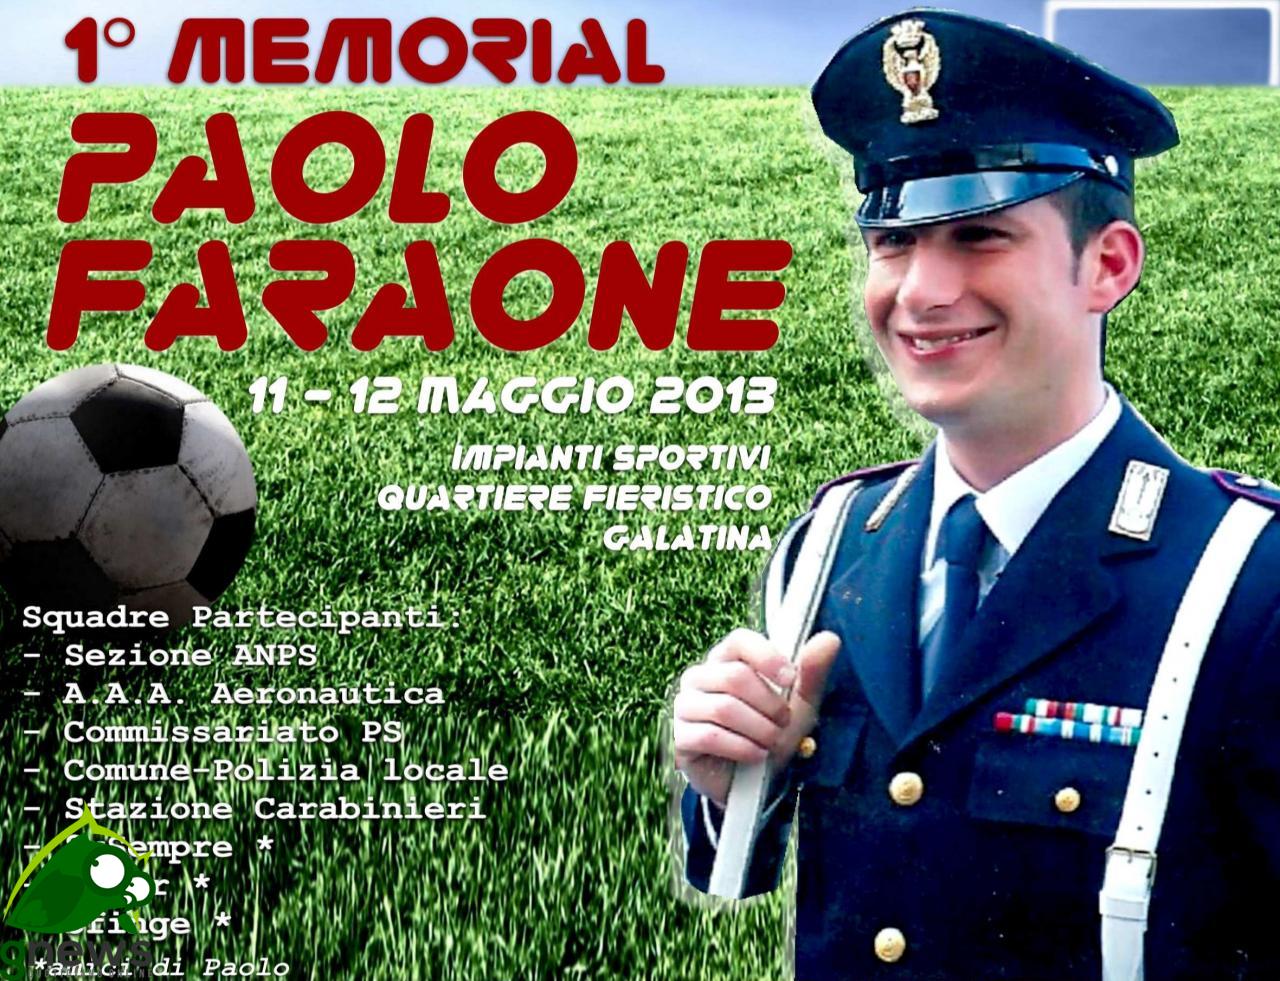 1° Memorial “Paolo Faraone”